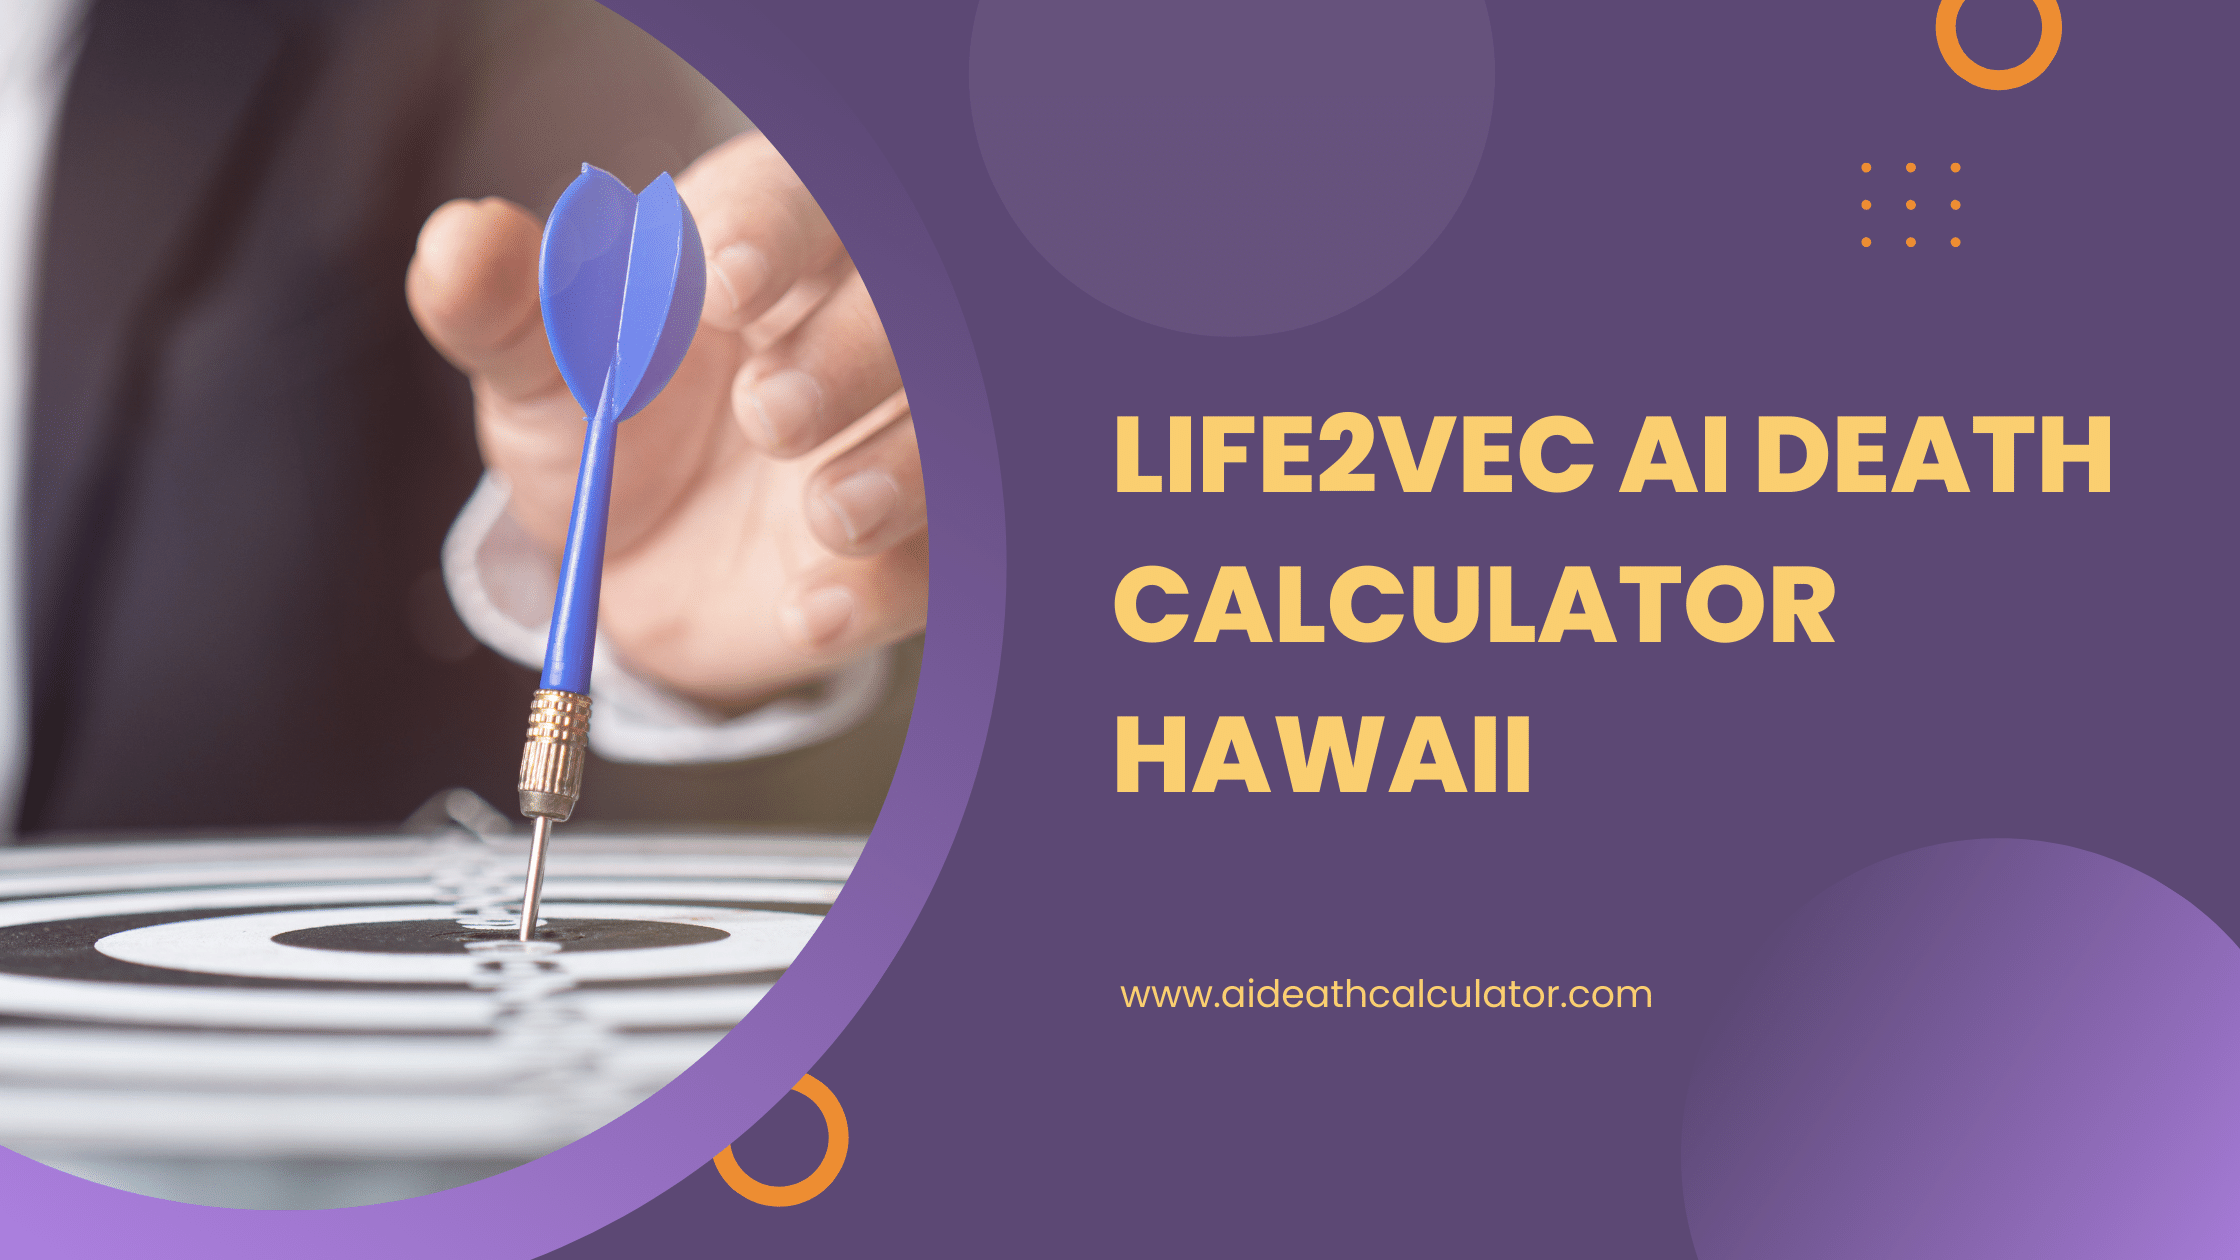 Life2Vec AI Death Calculator Hawaii